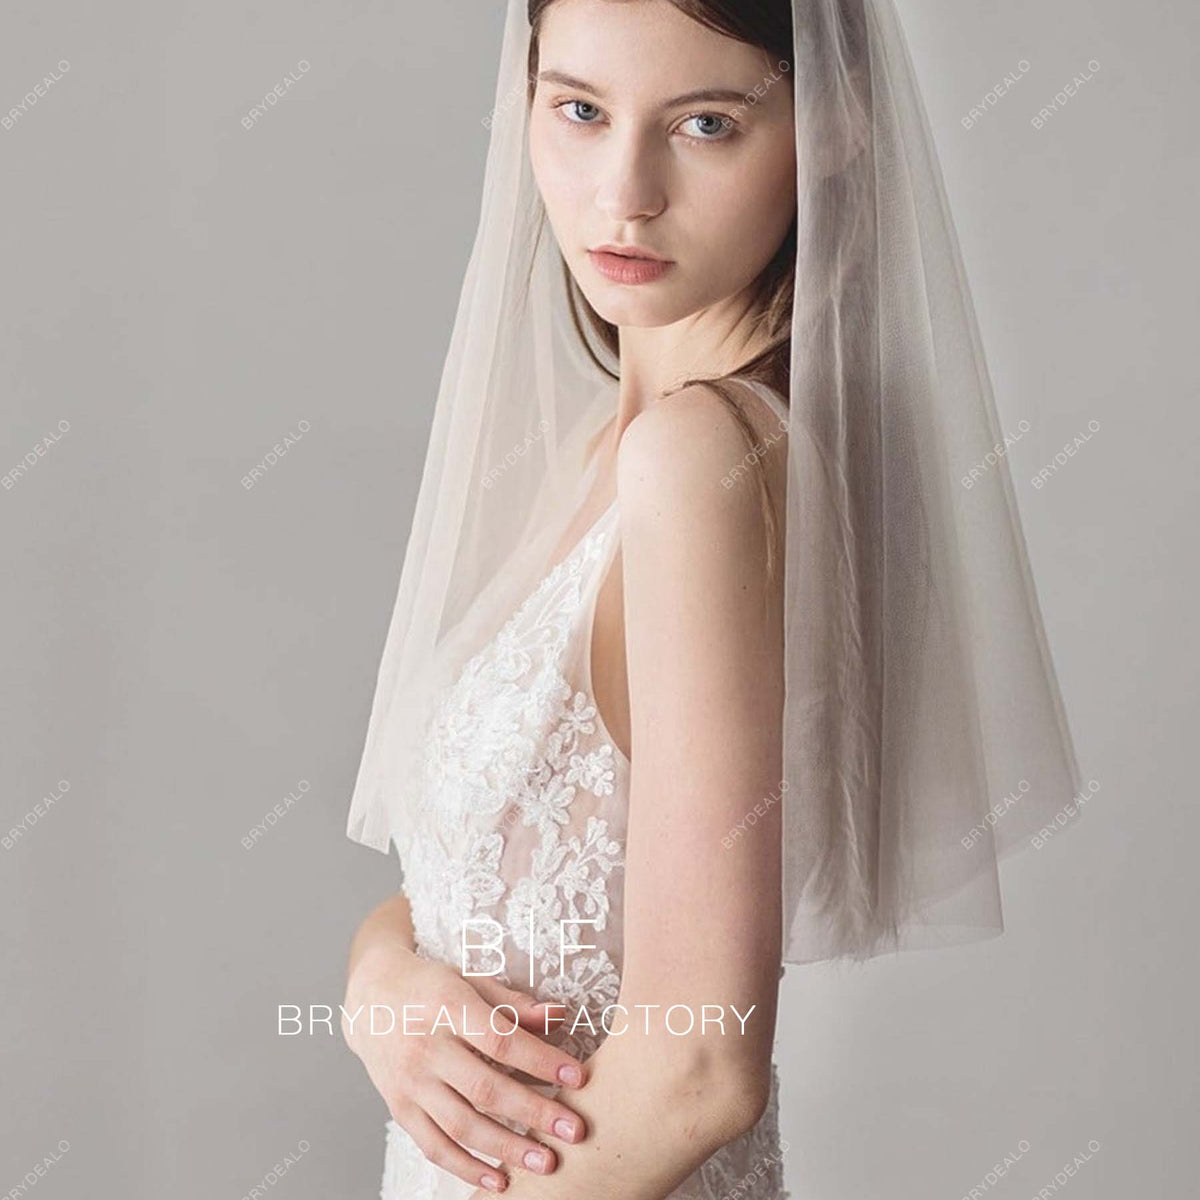 Brydealo Factory Shoulder Length Bridal Veil Short Wedding Tulle Headpiece